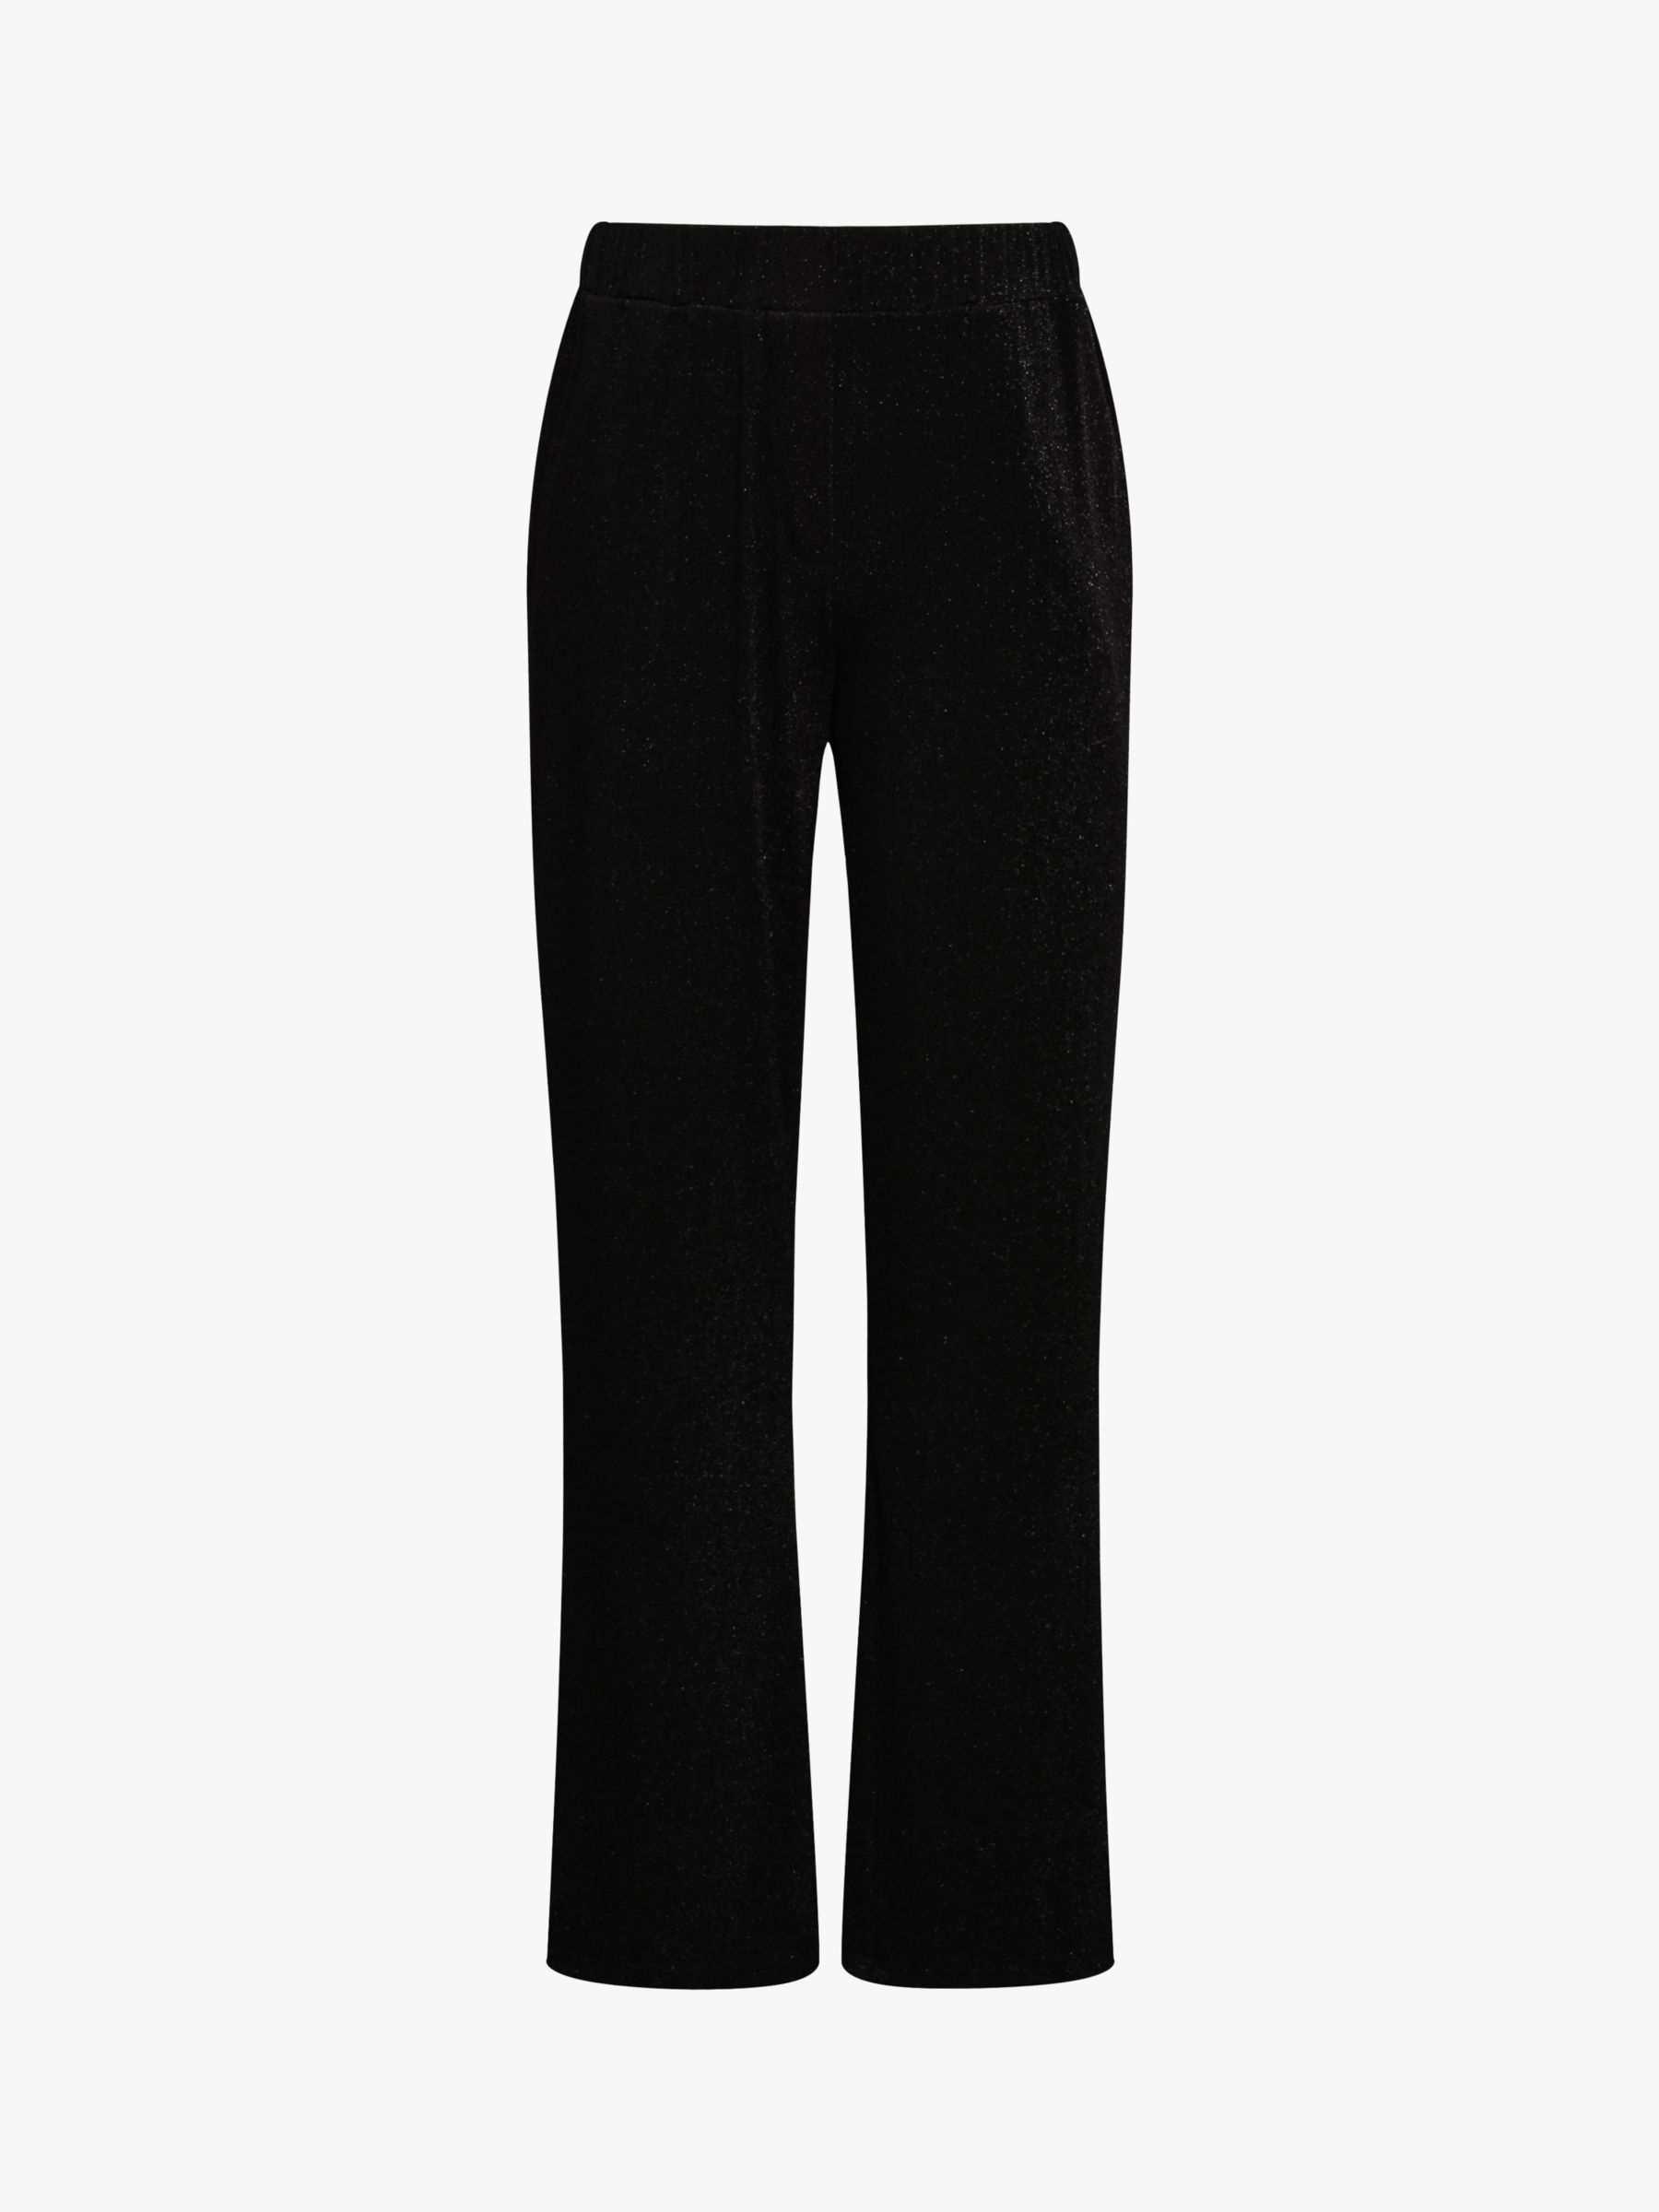 A-VIEW Eva Loose Trousers, Black at John Lewis & Partners